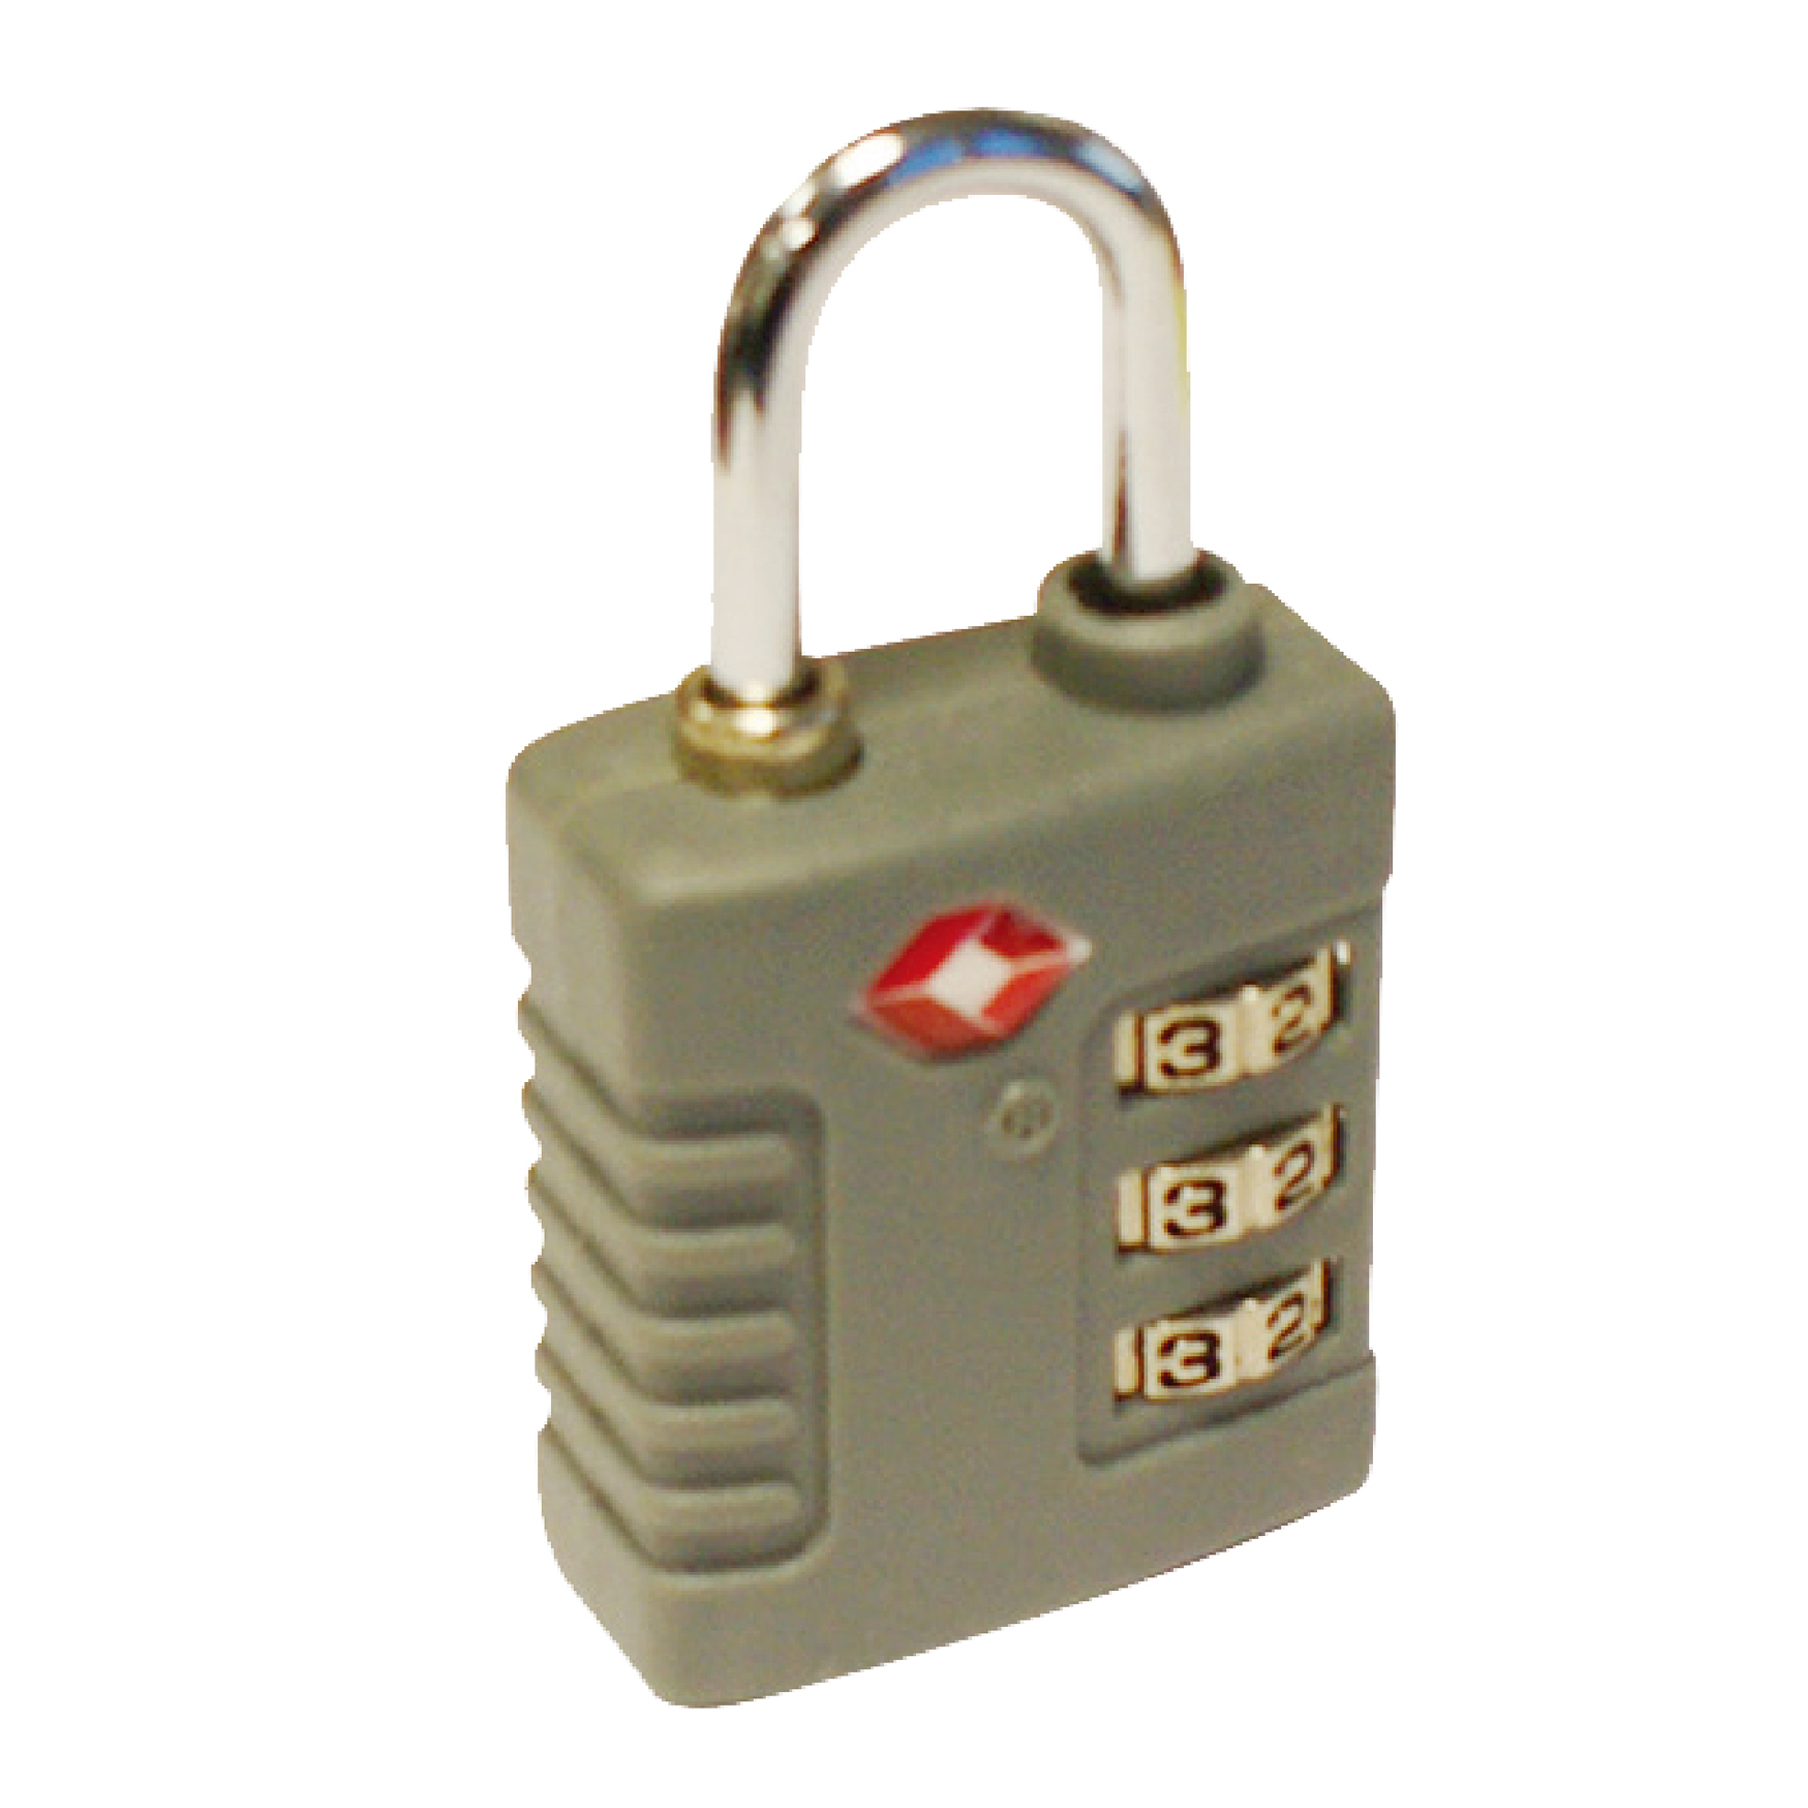 Tsa Combination Lock GW8257